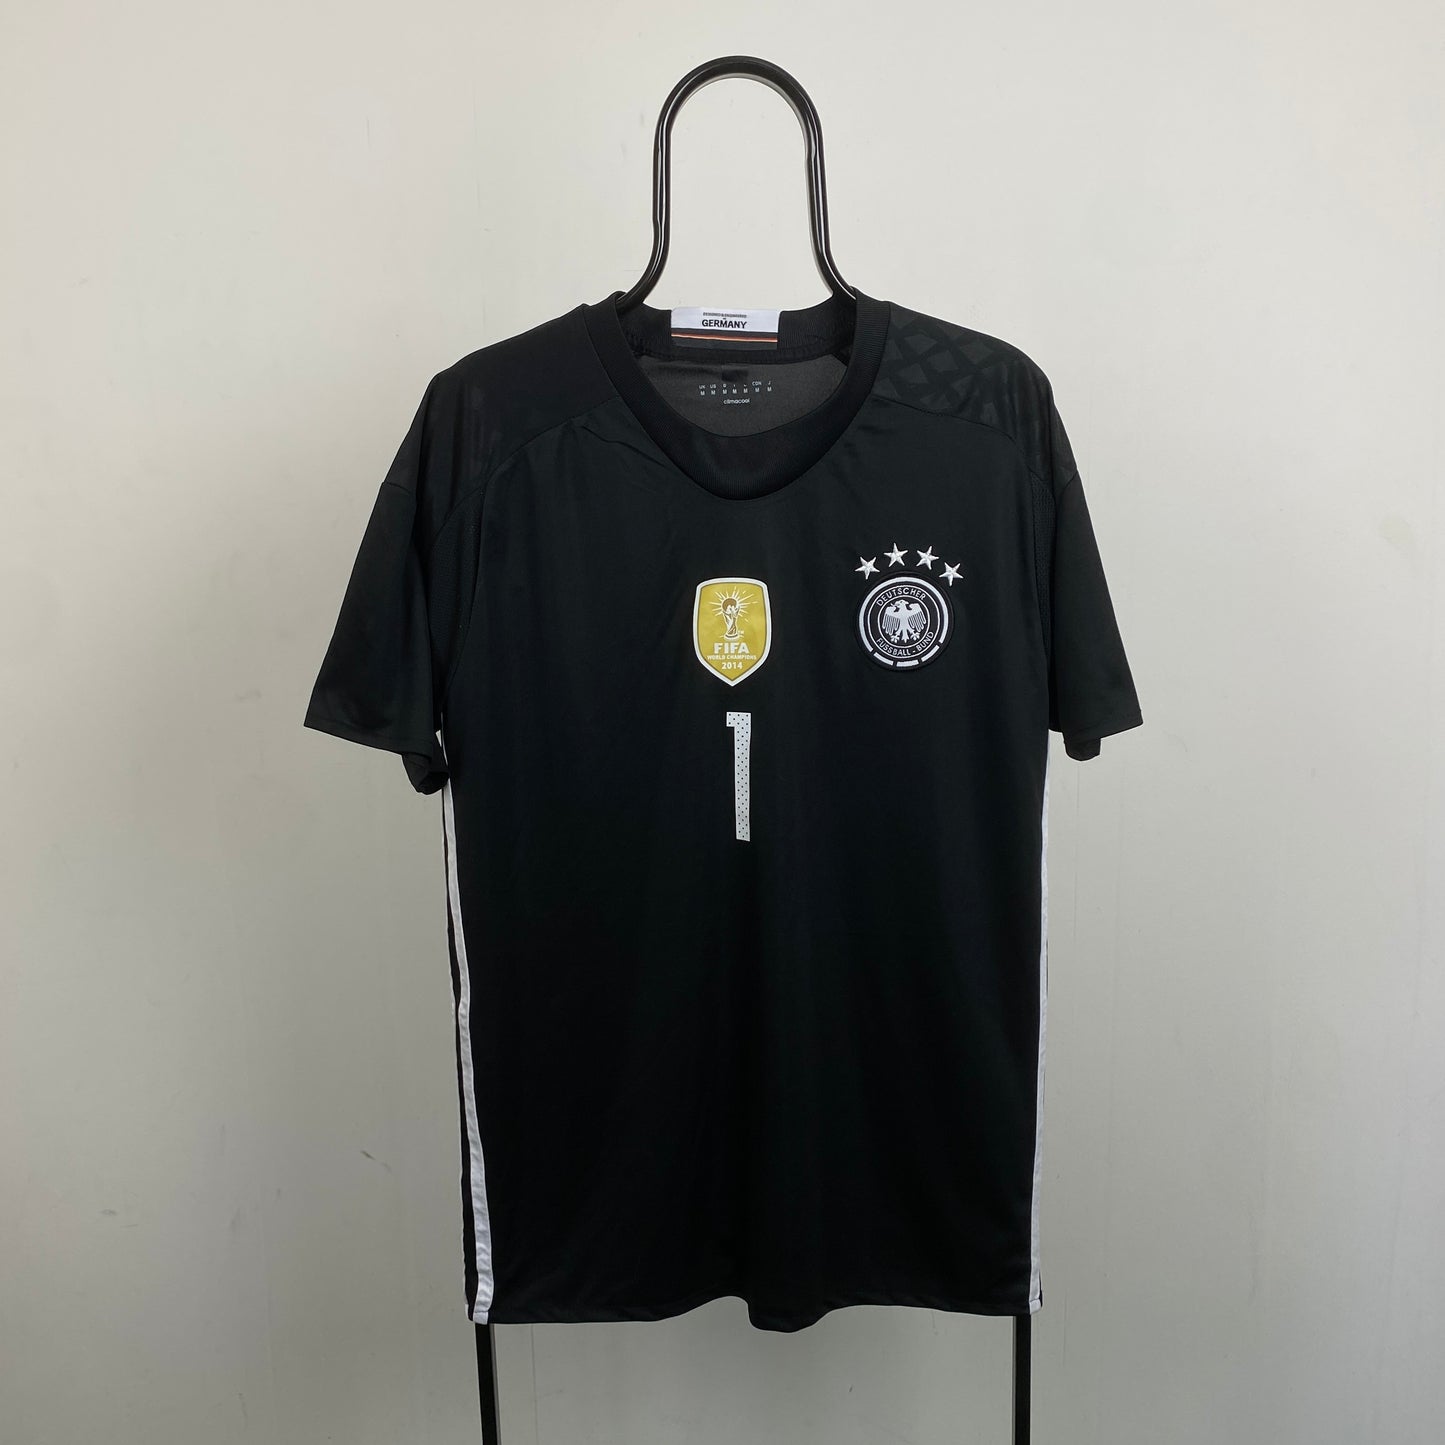 Retro Germany Neuer Football Shirt T-Shirt Black Medium